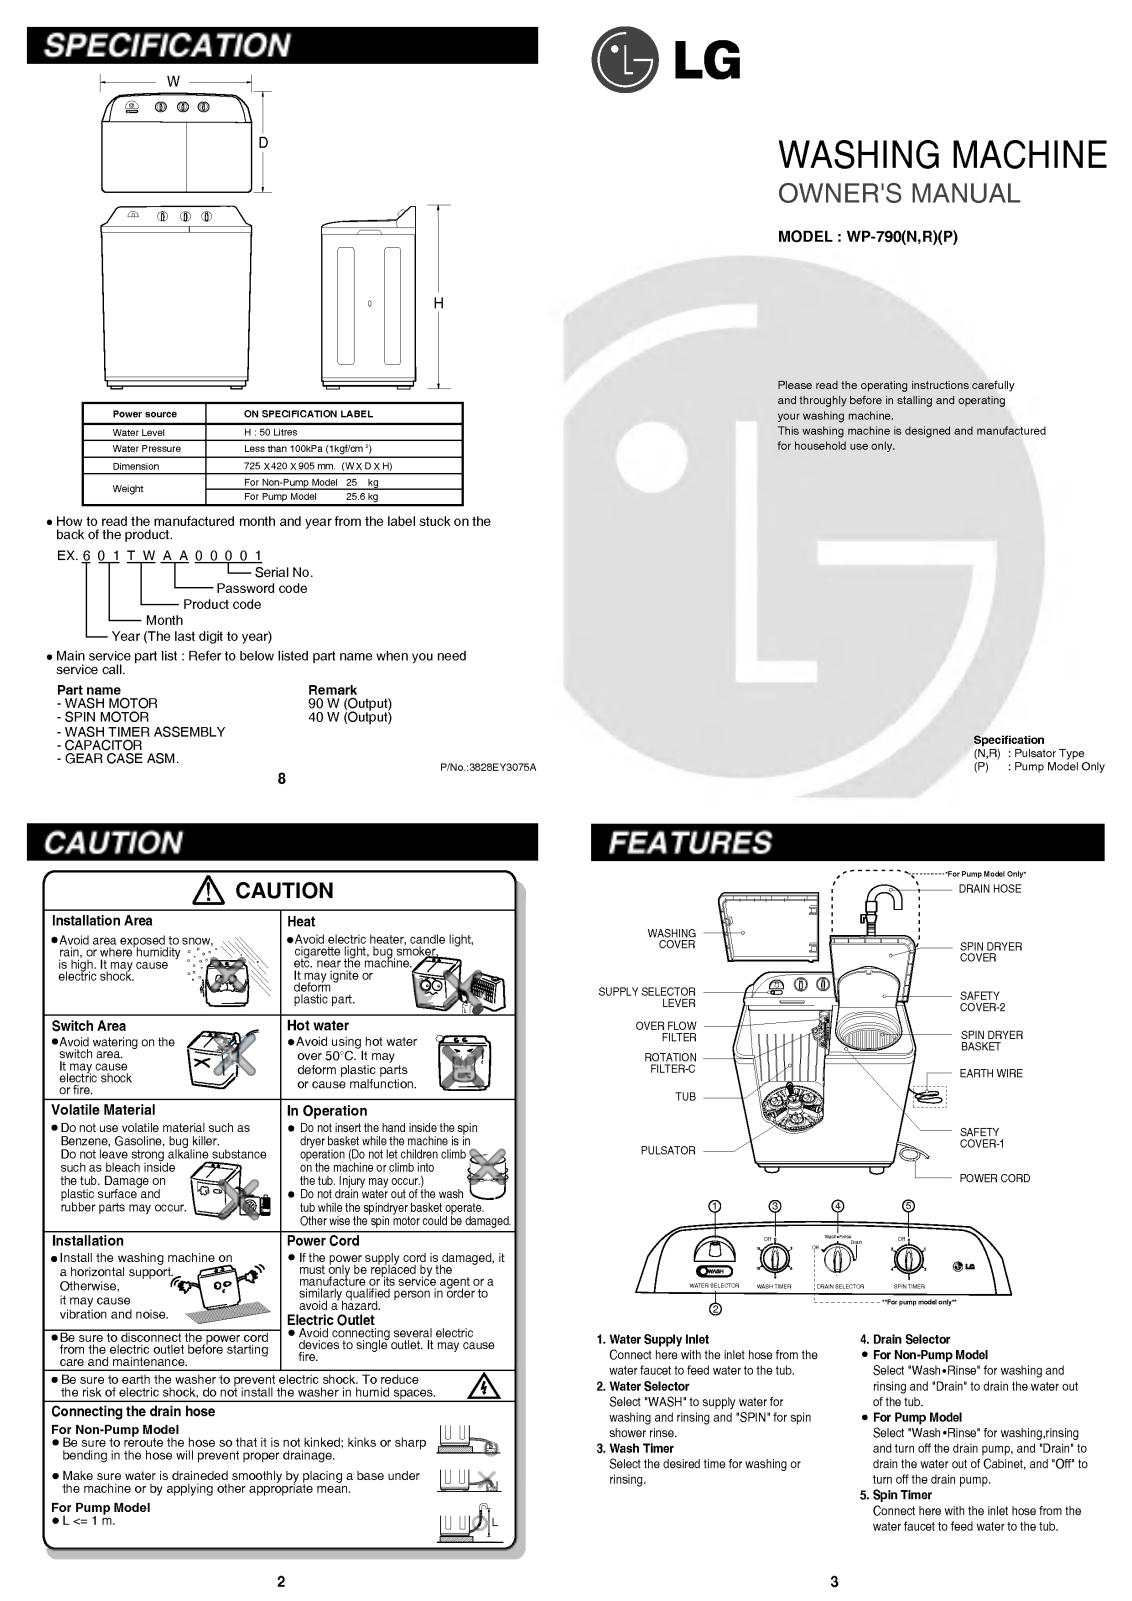 LG WP-790R Owner’s Manual